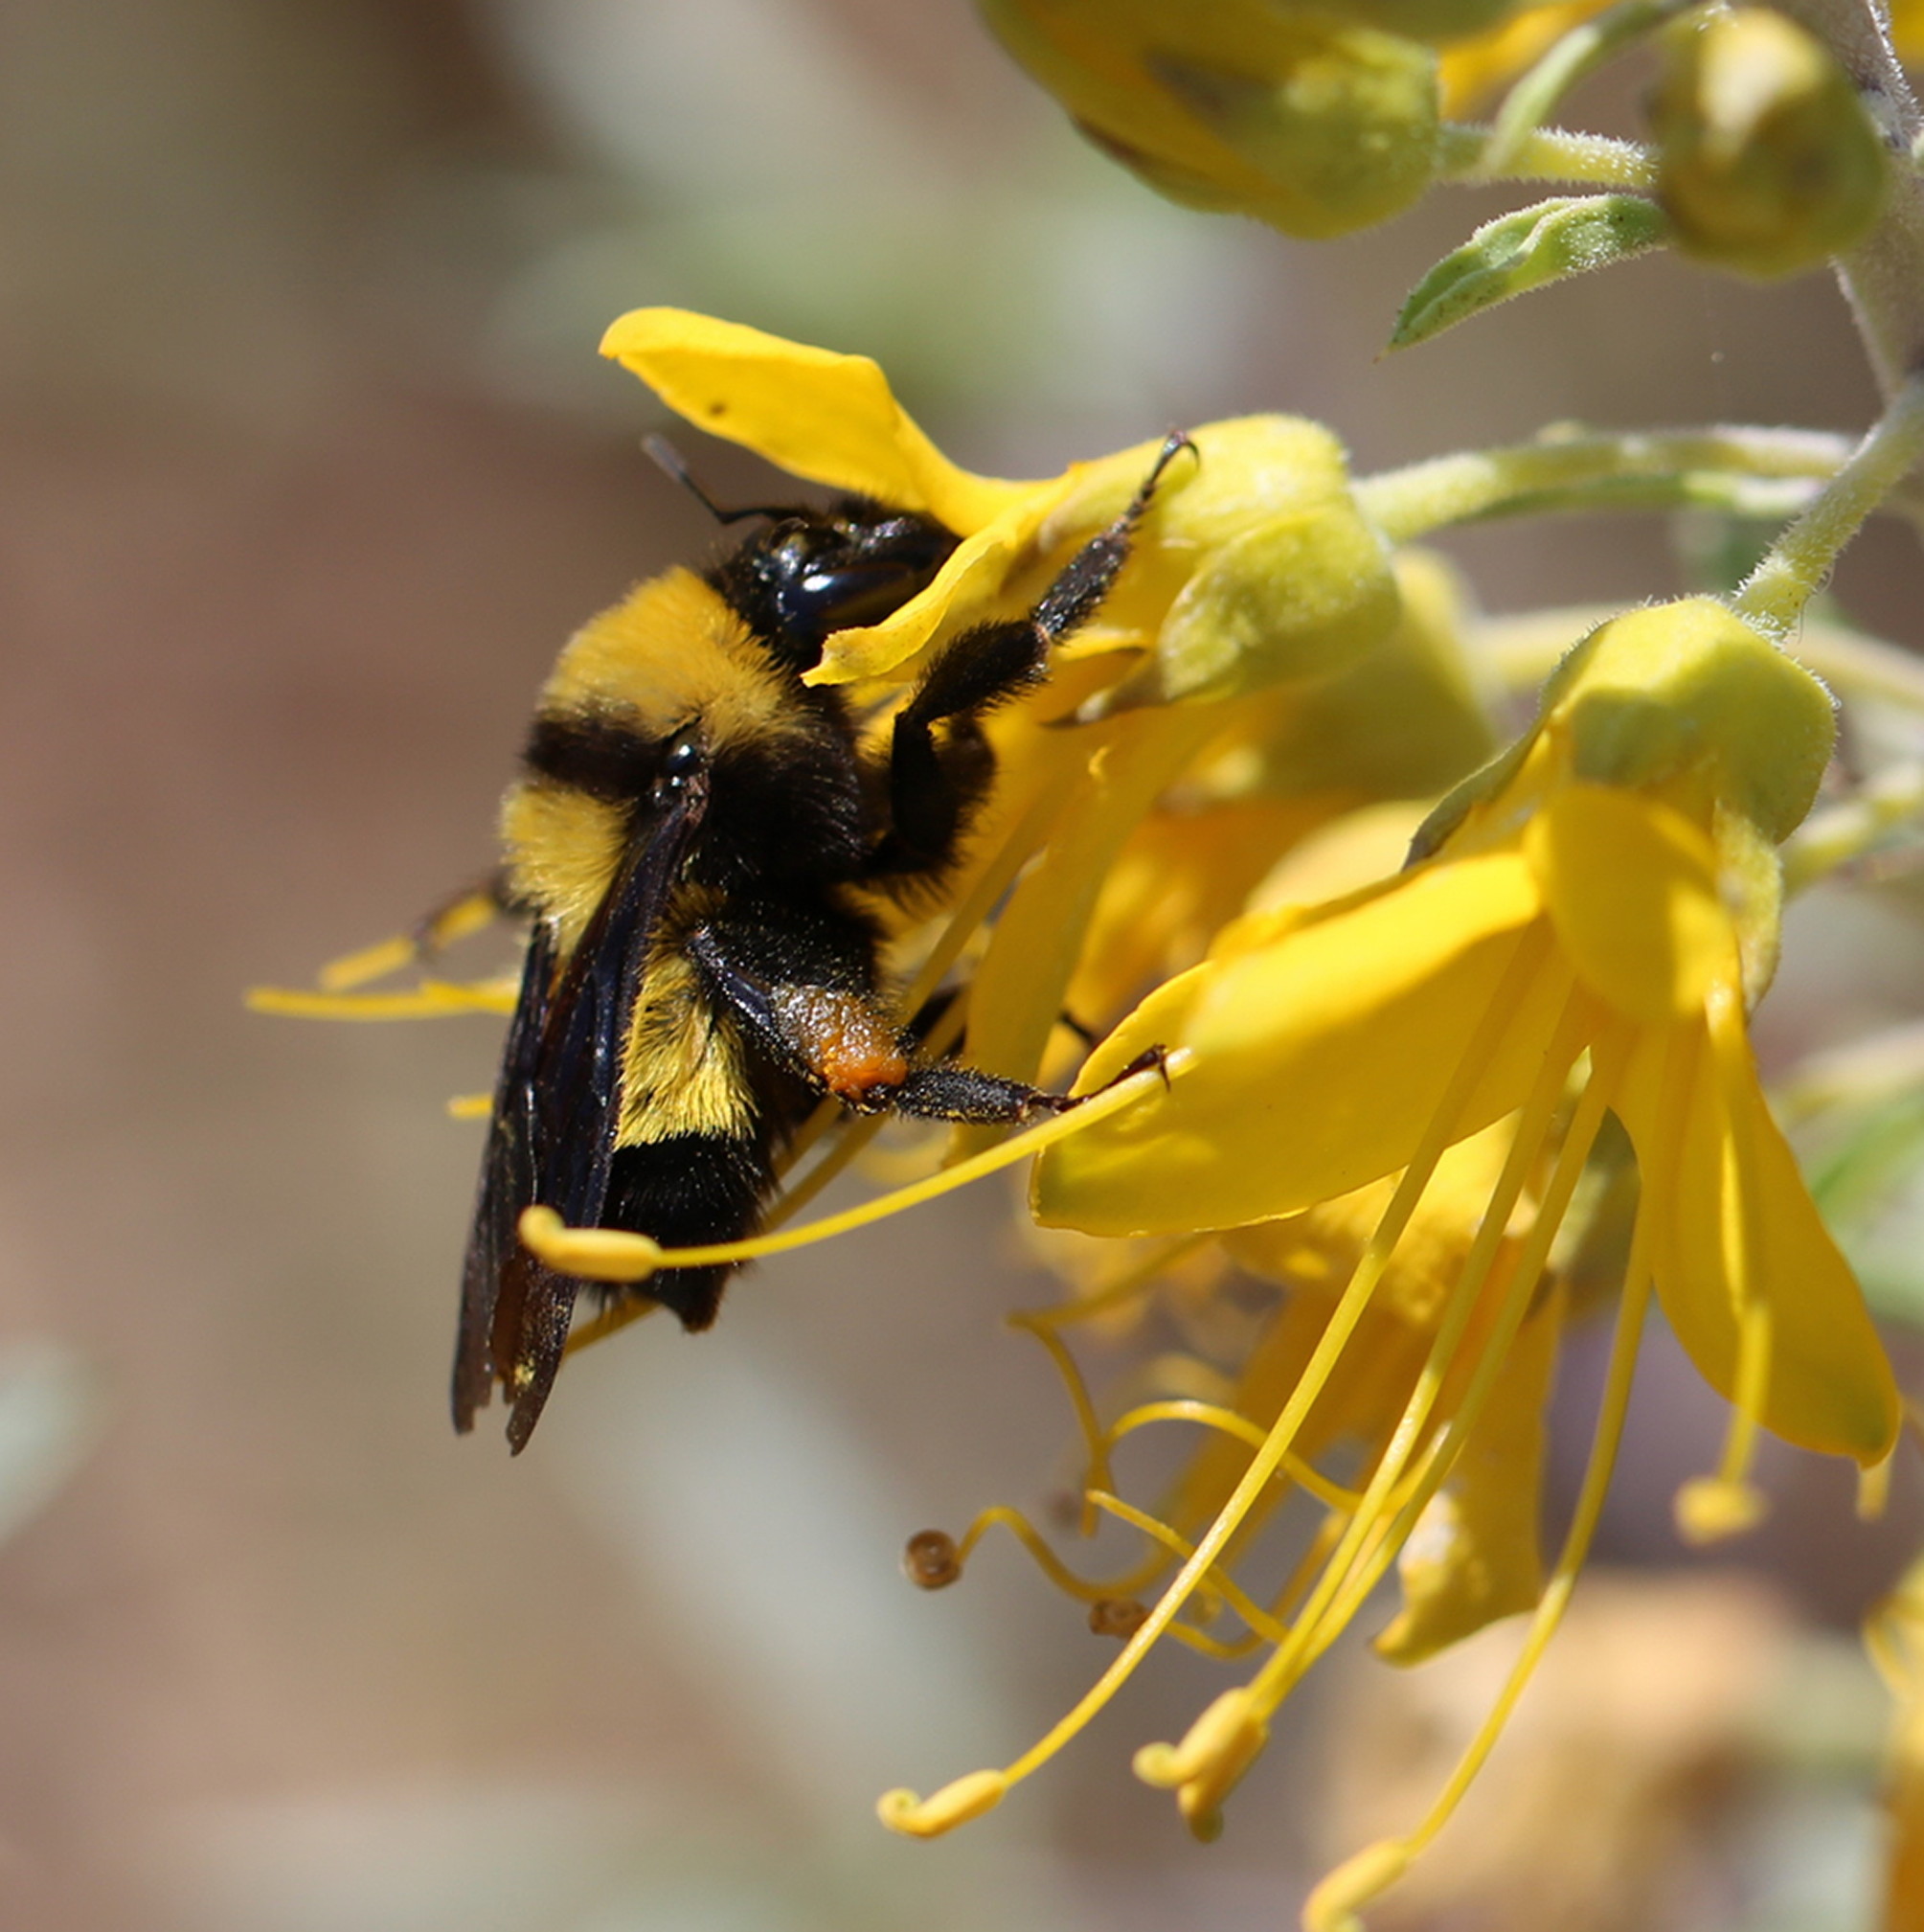 Bumble Bee in Bladderpod, 2018